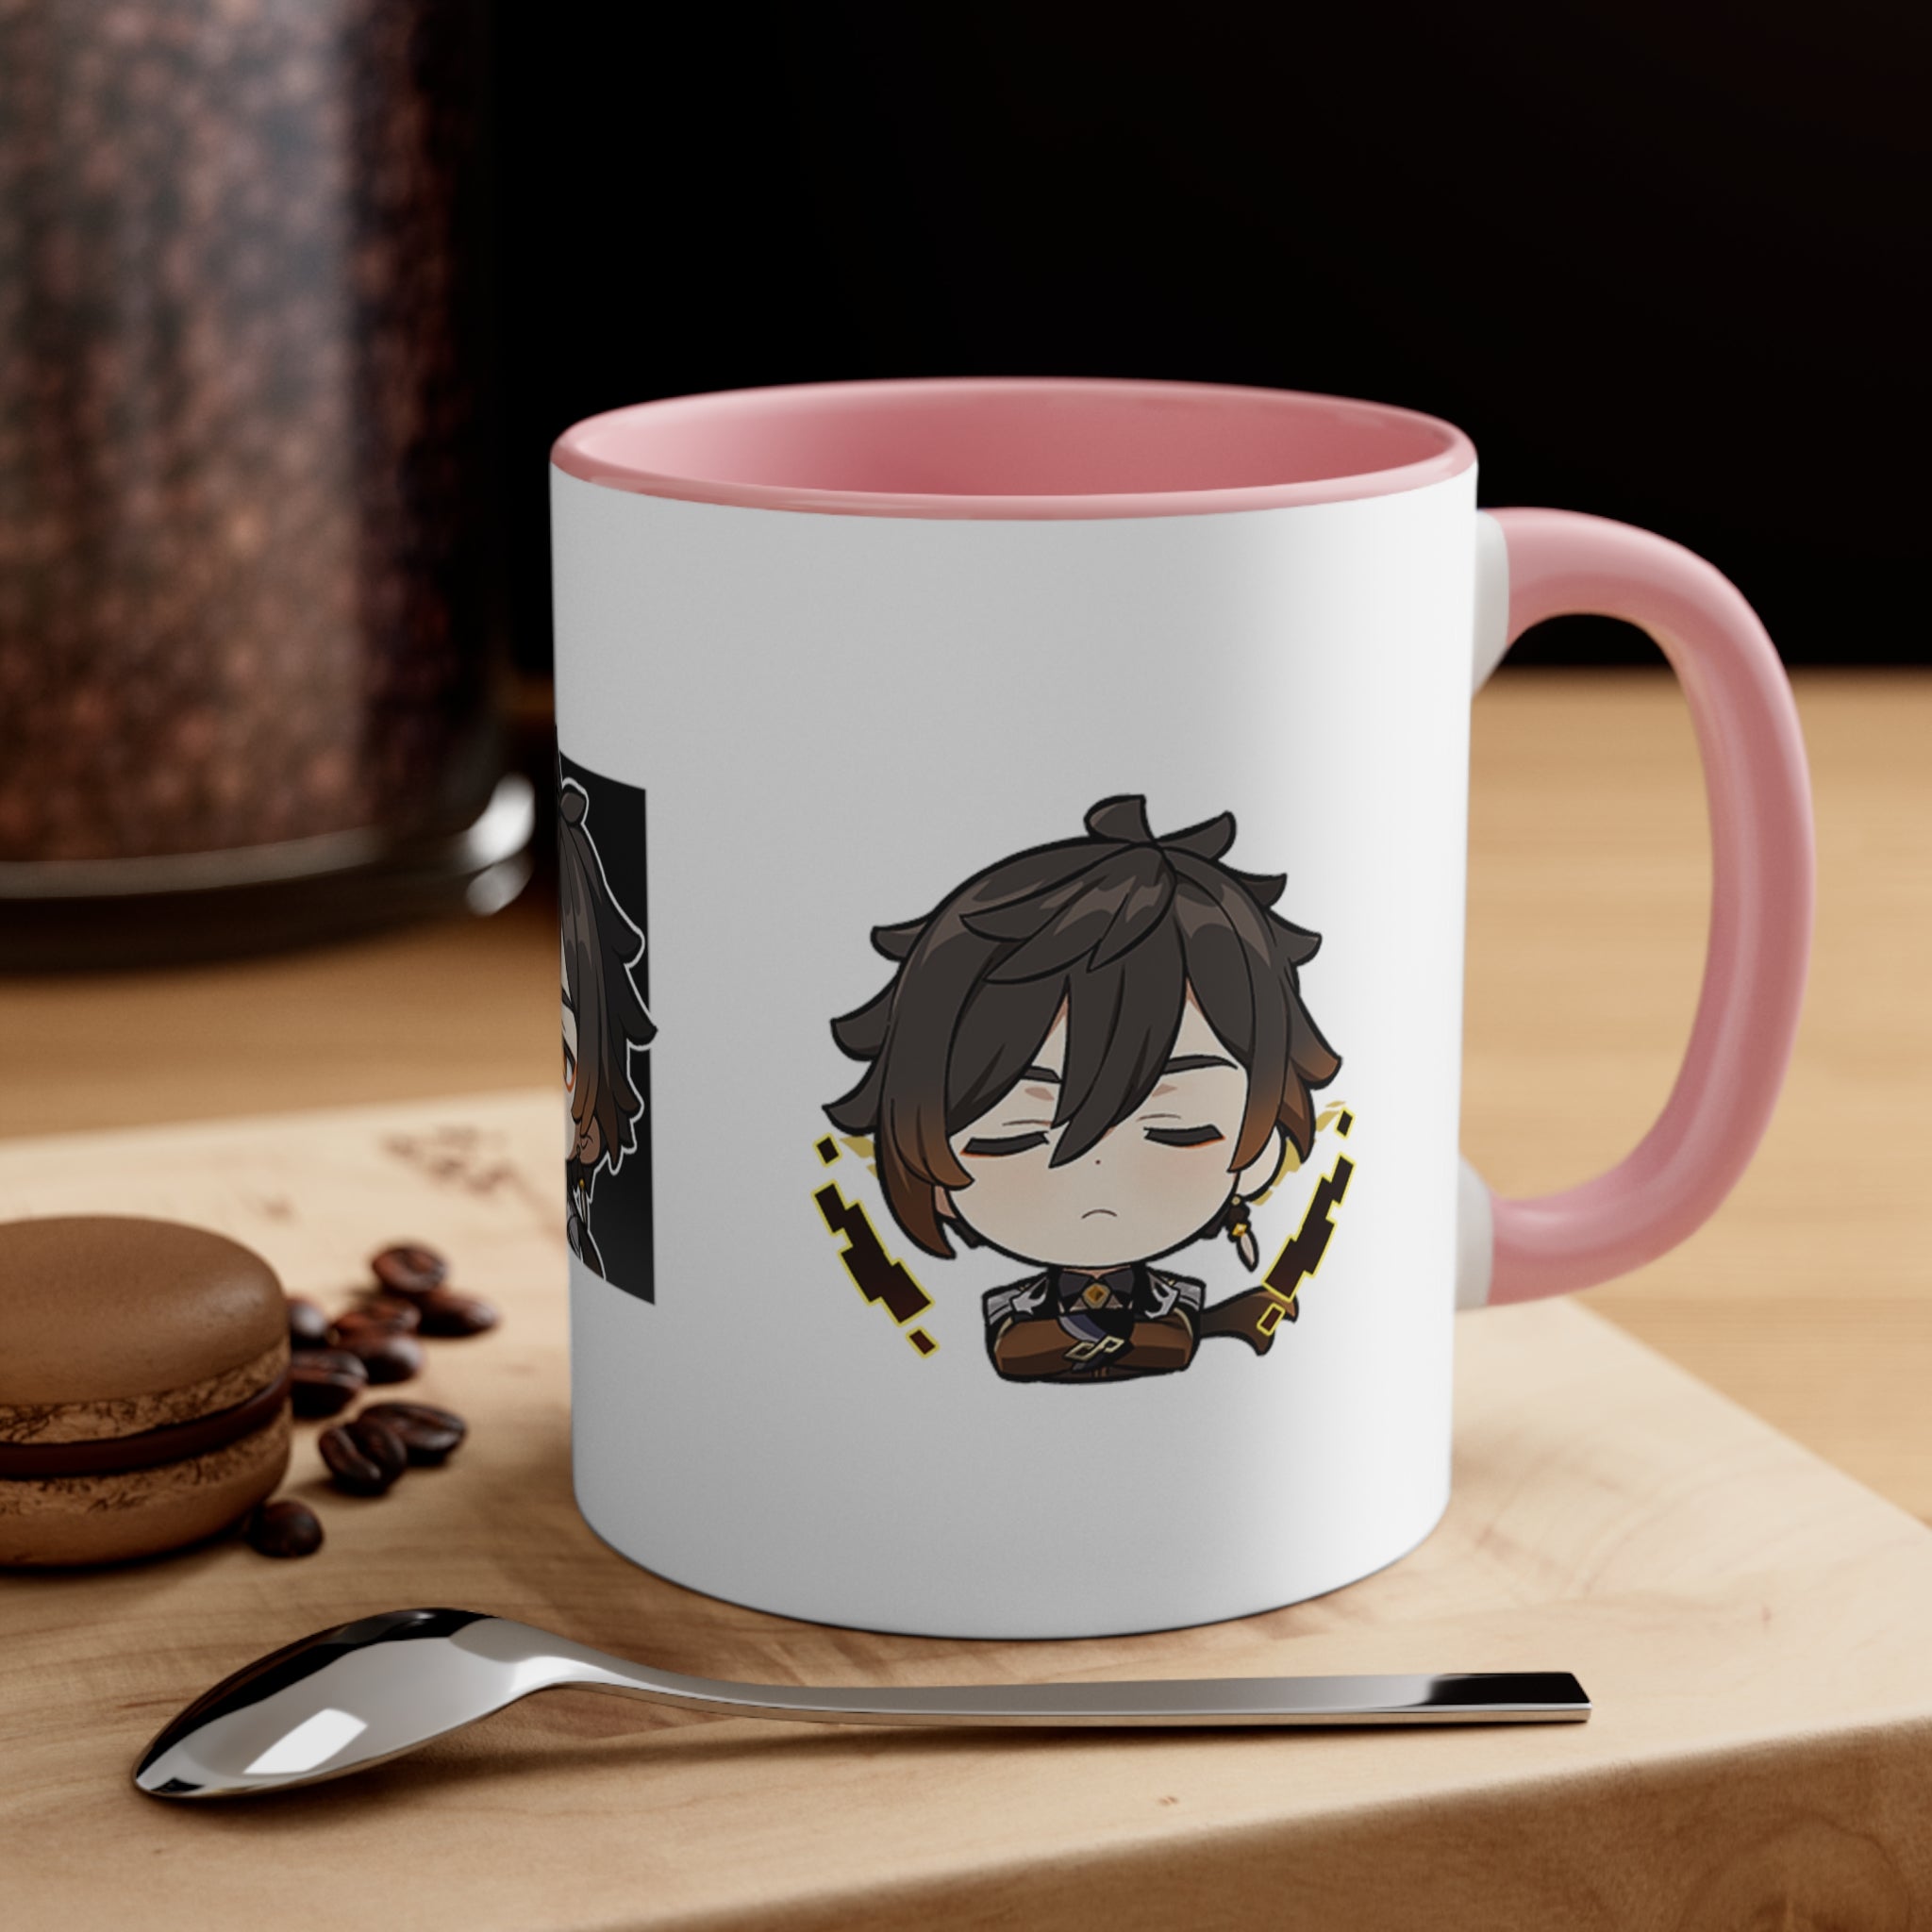 Zhong Li Genshin Impact Accent Coffee Mug, 11oz Cups Mugs Cup Gift For Gamer Gifts Game Anime Fanart Fan Birthday Valentine's Christmas